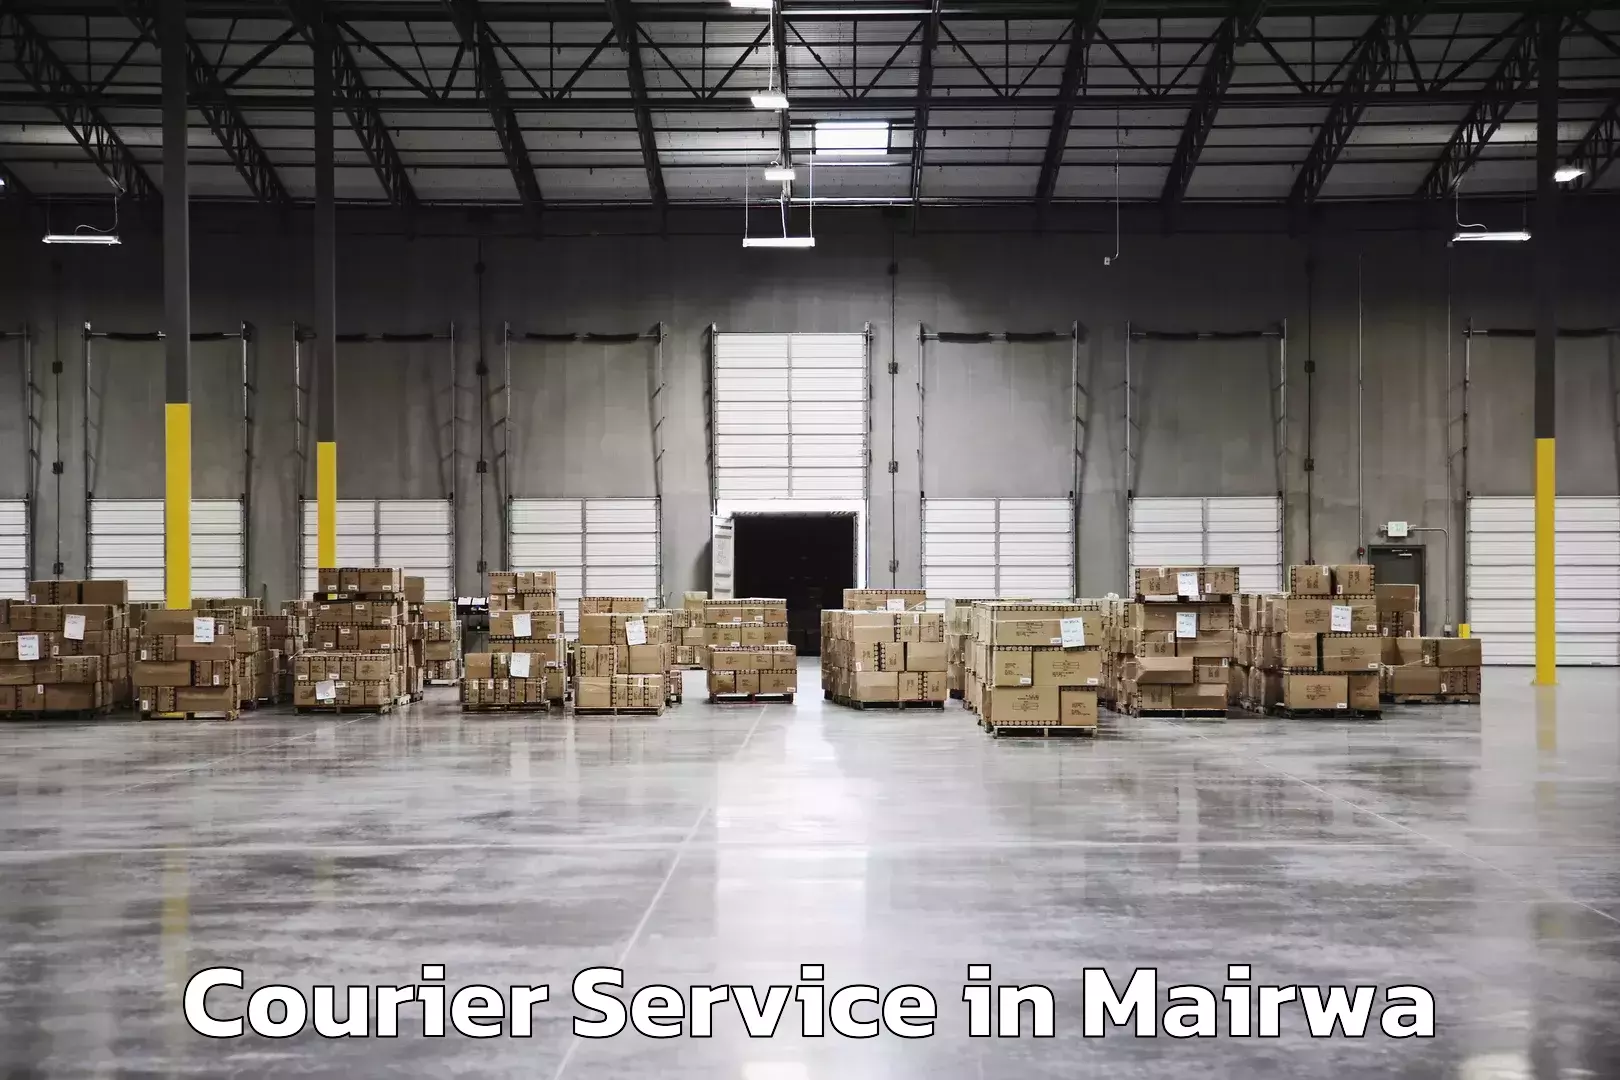 24-hour courier service in Mairwa